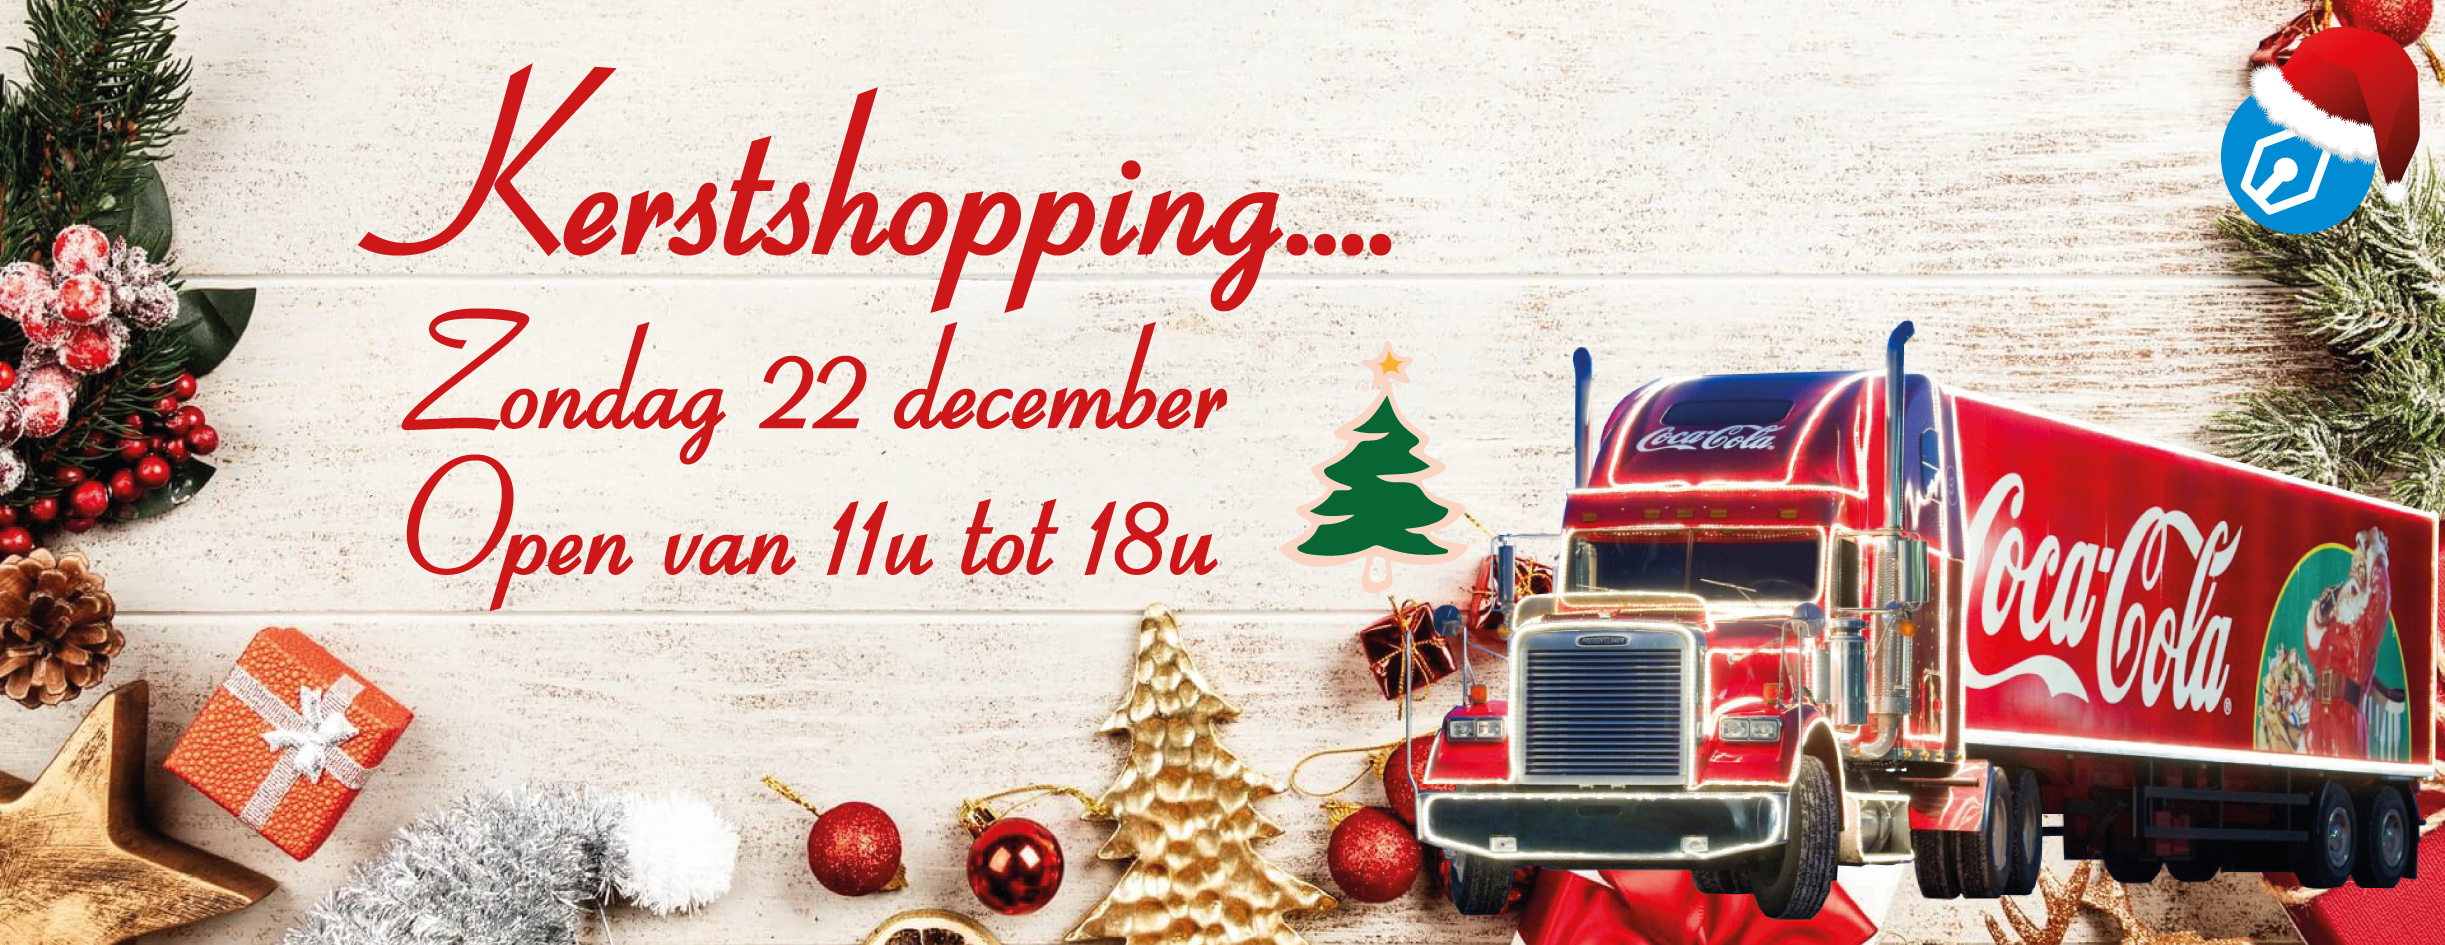 kersthopping halle coca cola truck kerstmis 2019 marcelis halle smart office 22 december oudstrijdersplein